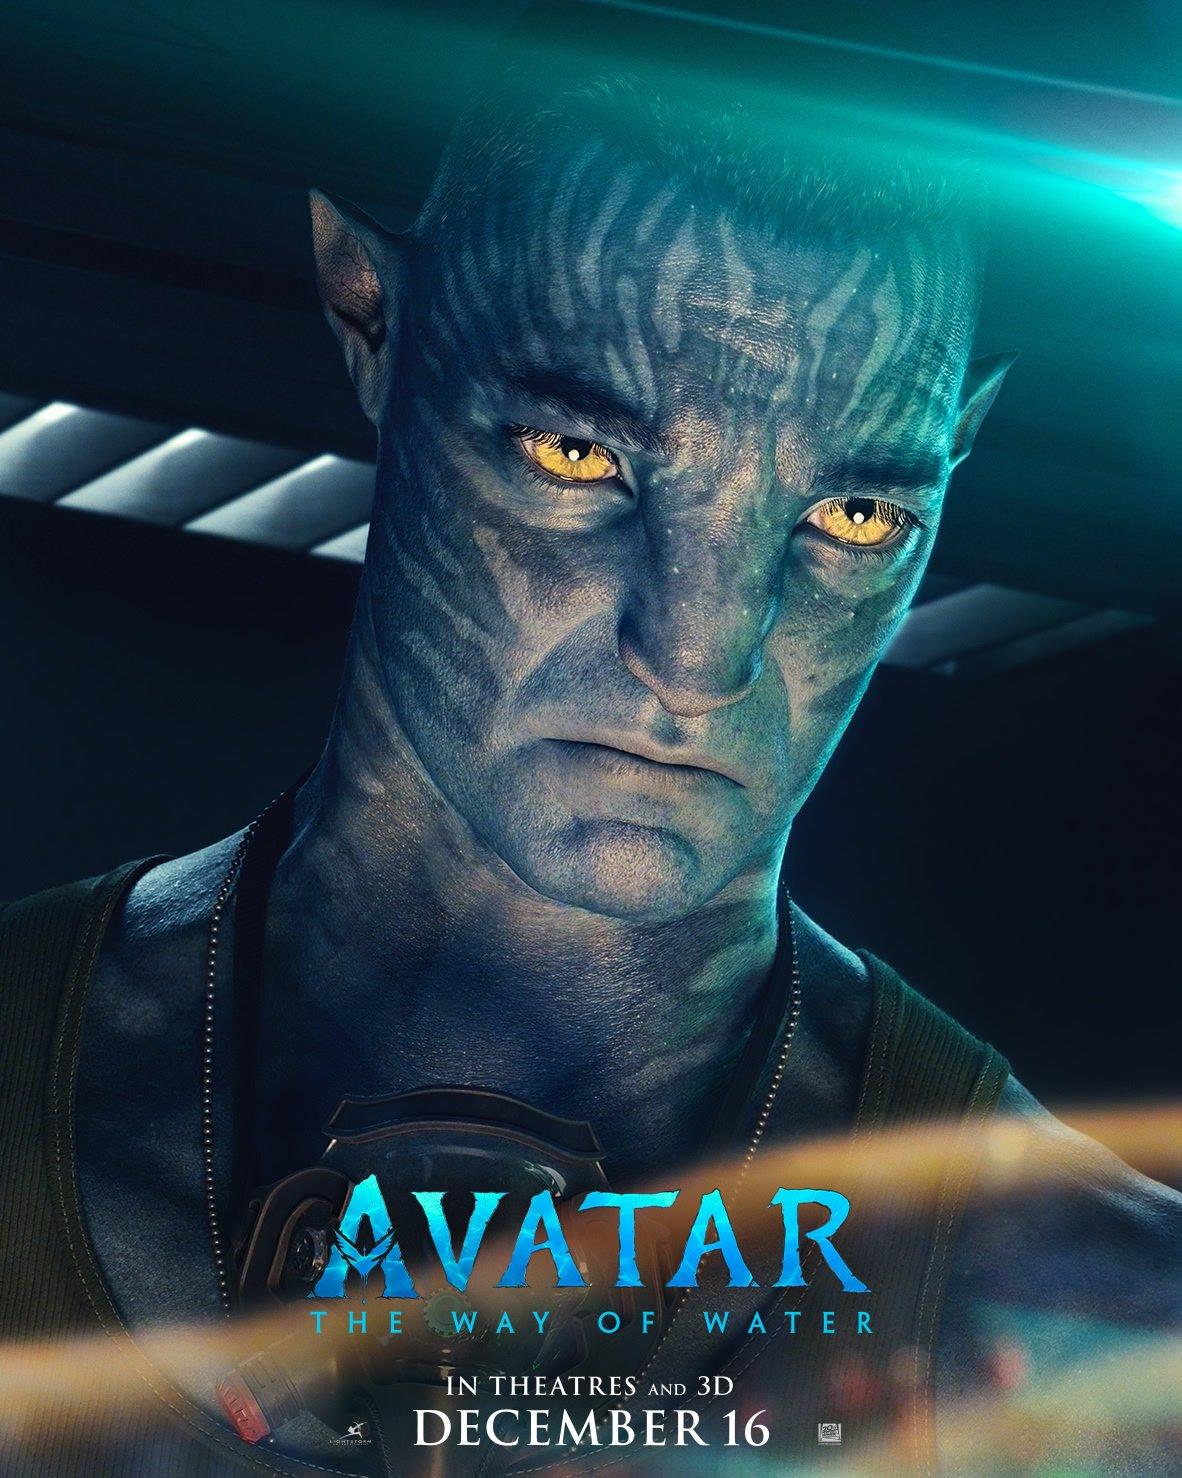 تریلر فیلم Avatar: The Way of Water + دانلود